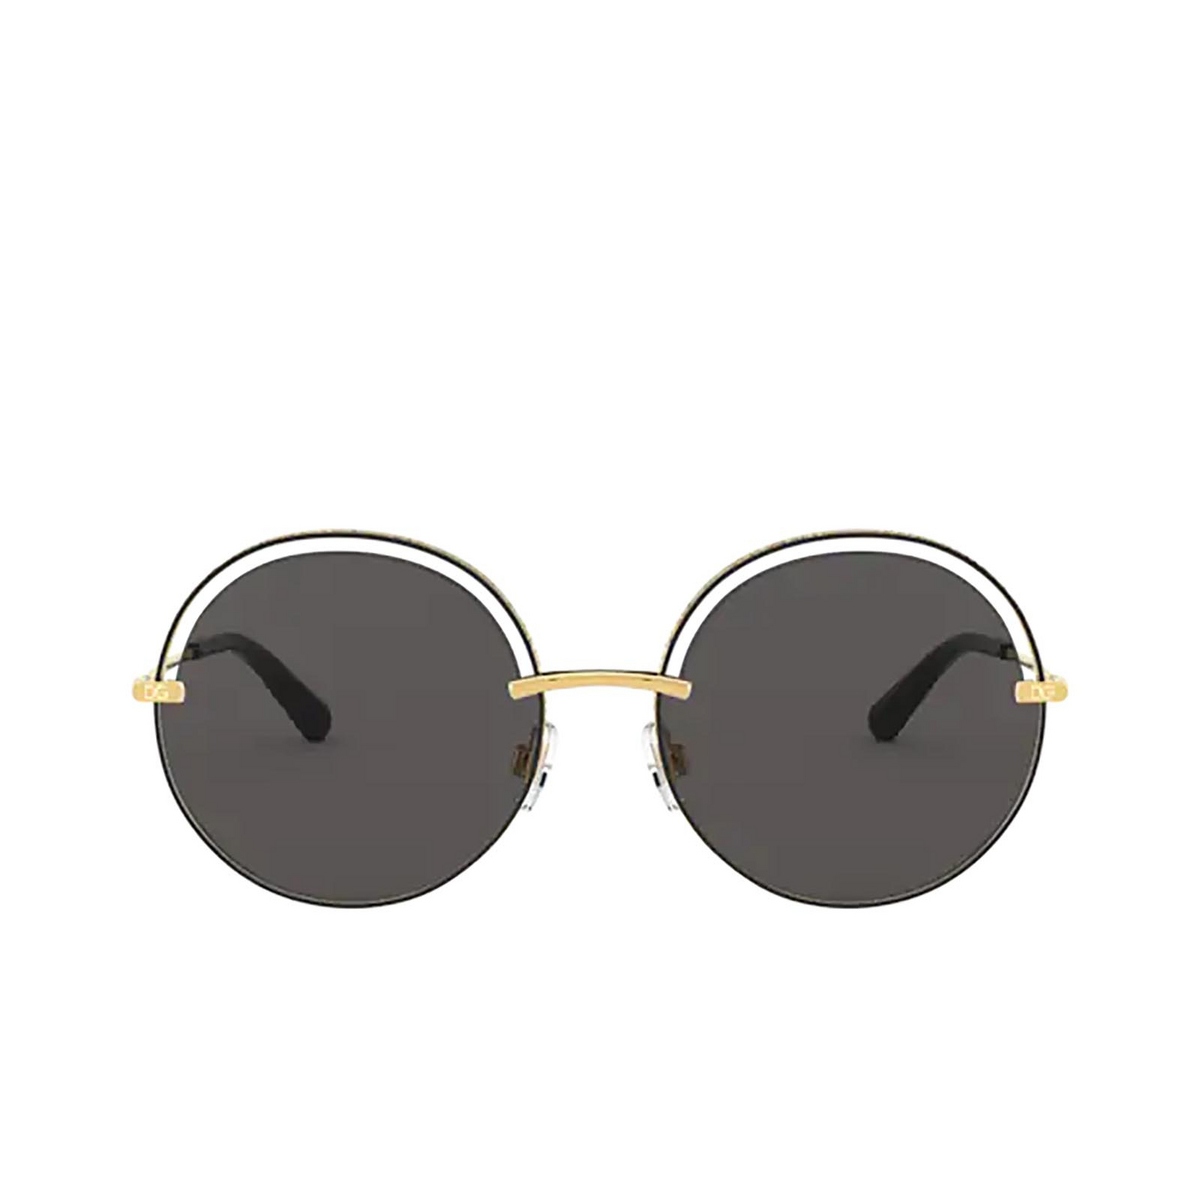 Dolce & Gabbana® Round Sunglasses: DG2262 color 133487 Black - 1/3